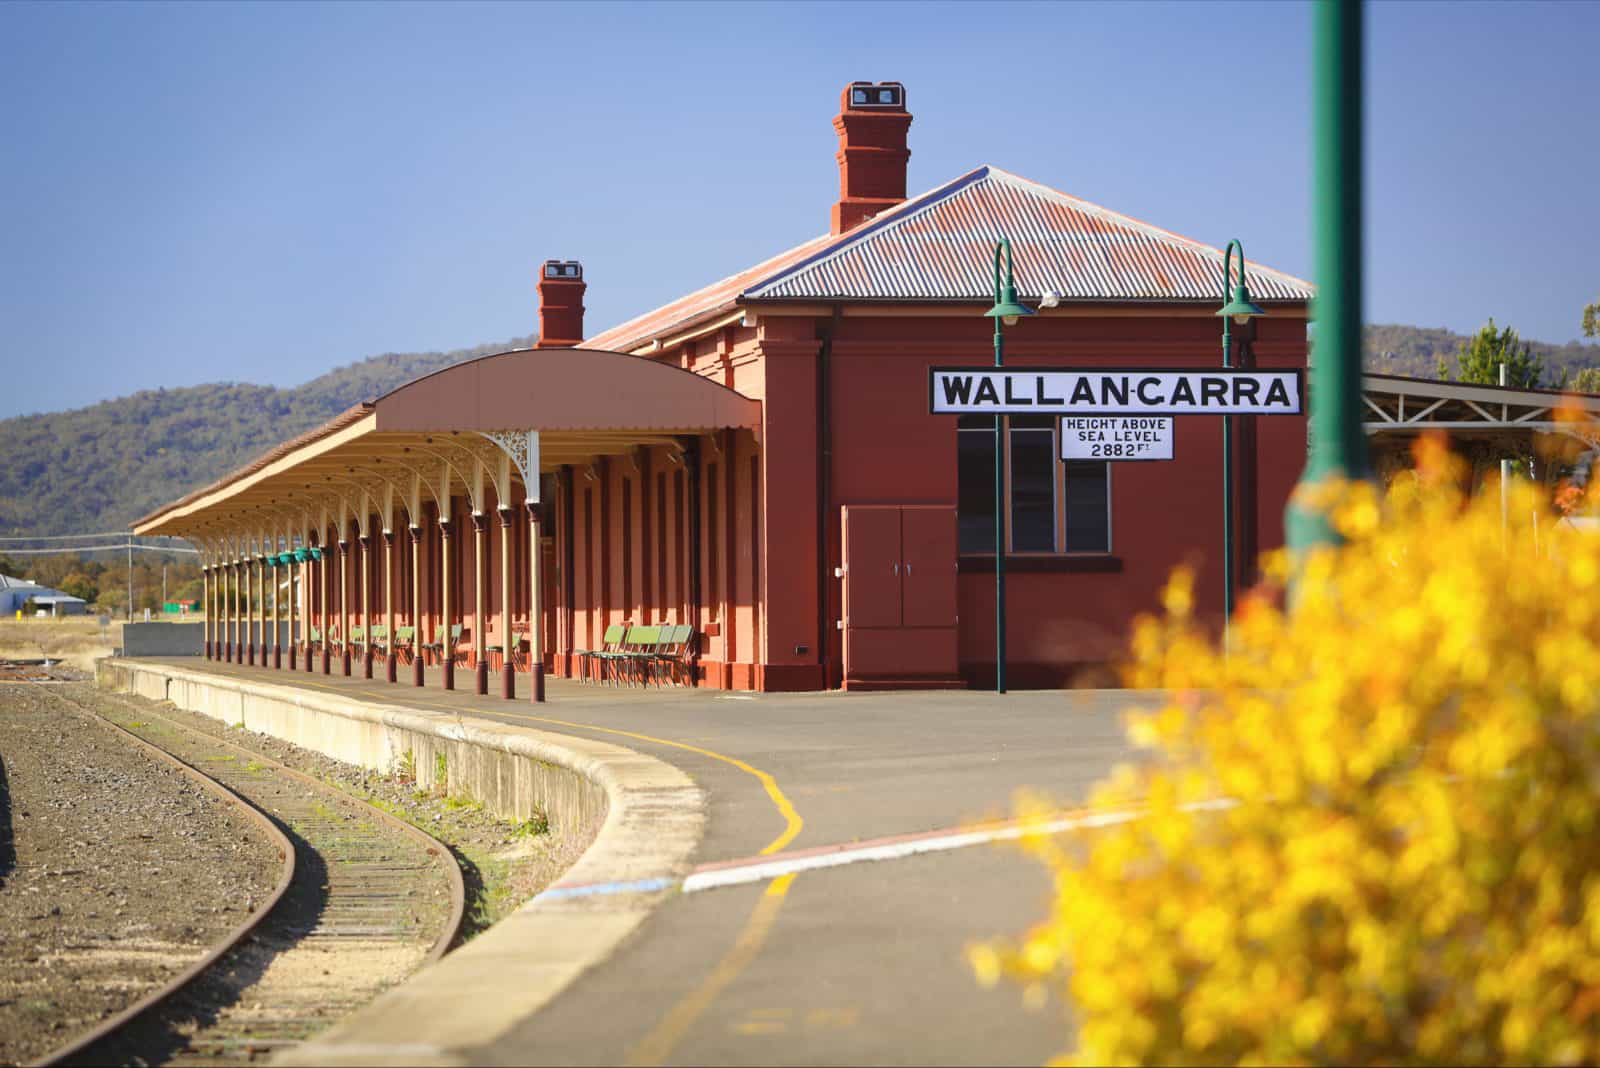 Wallangarra Station